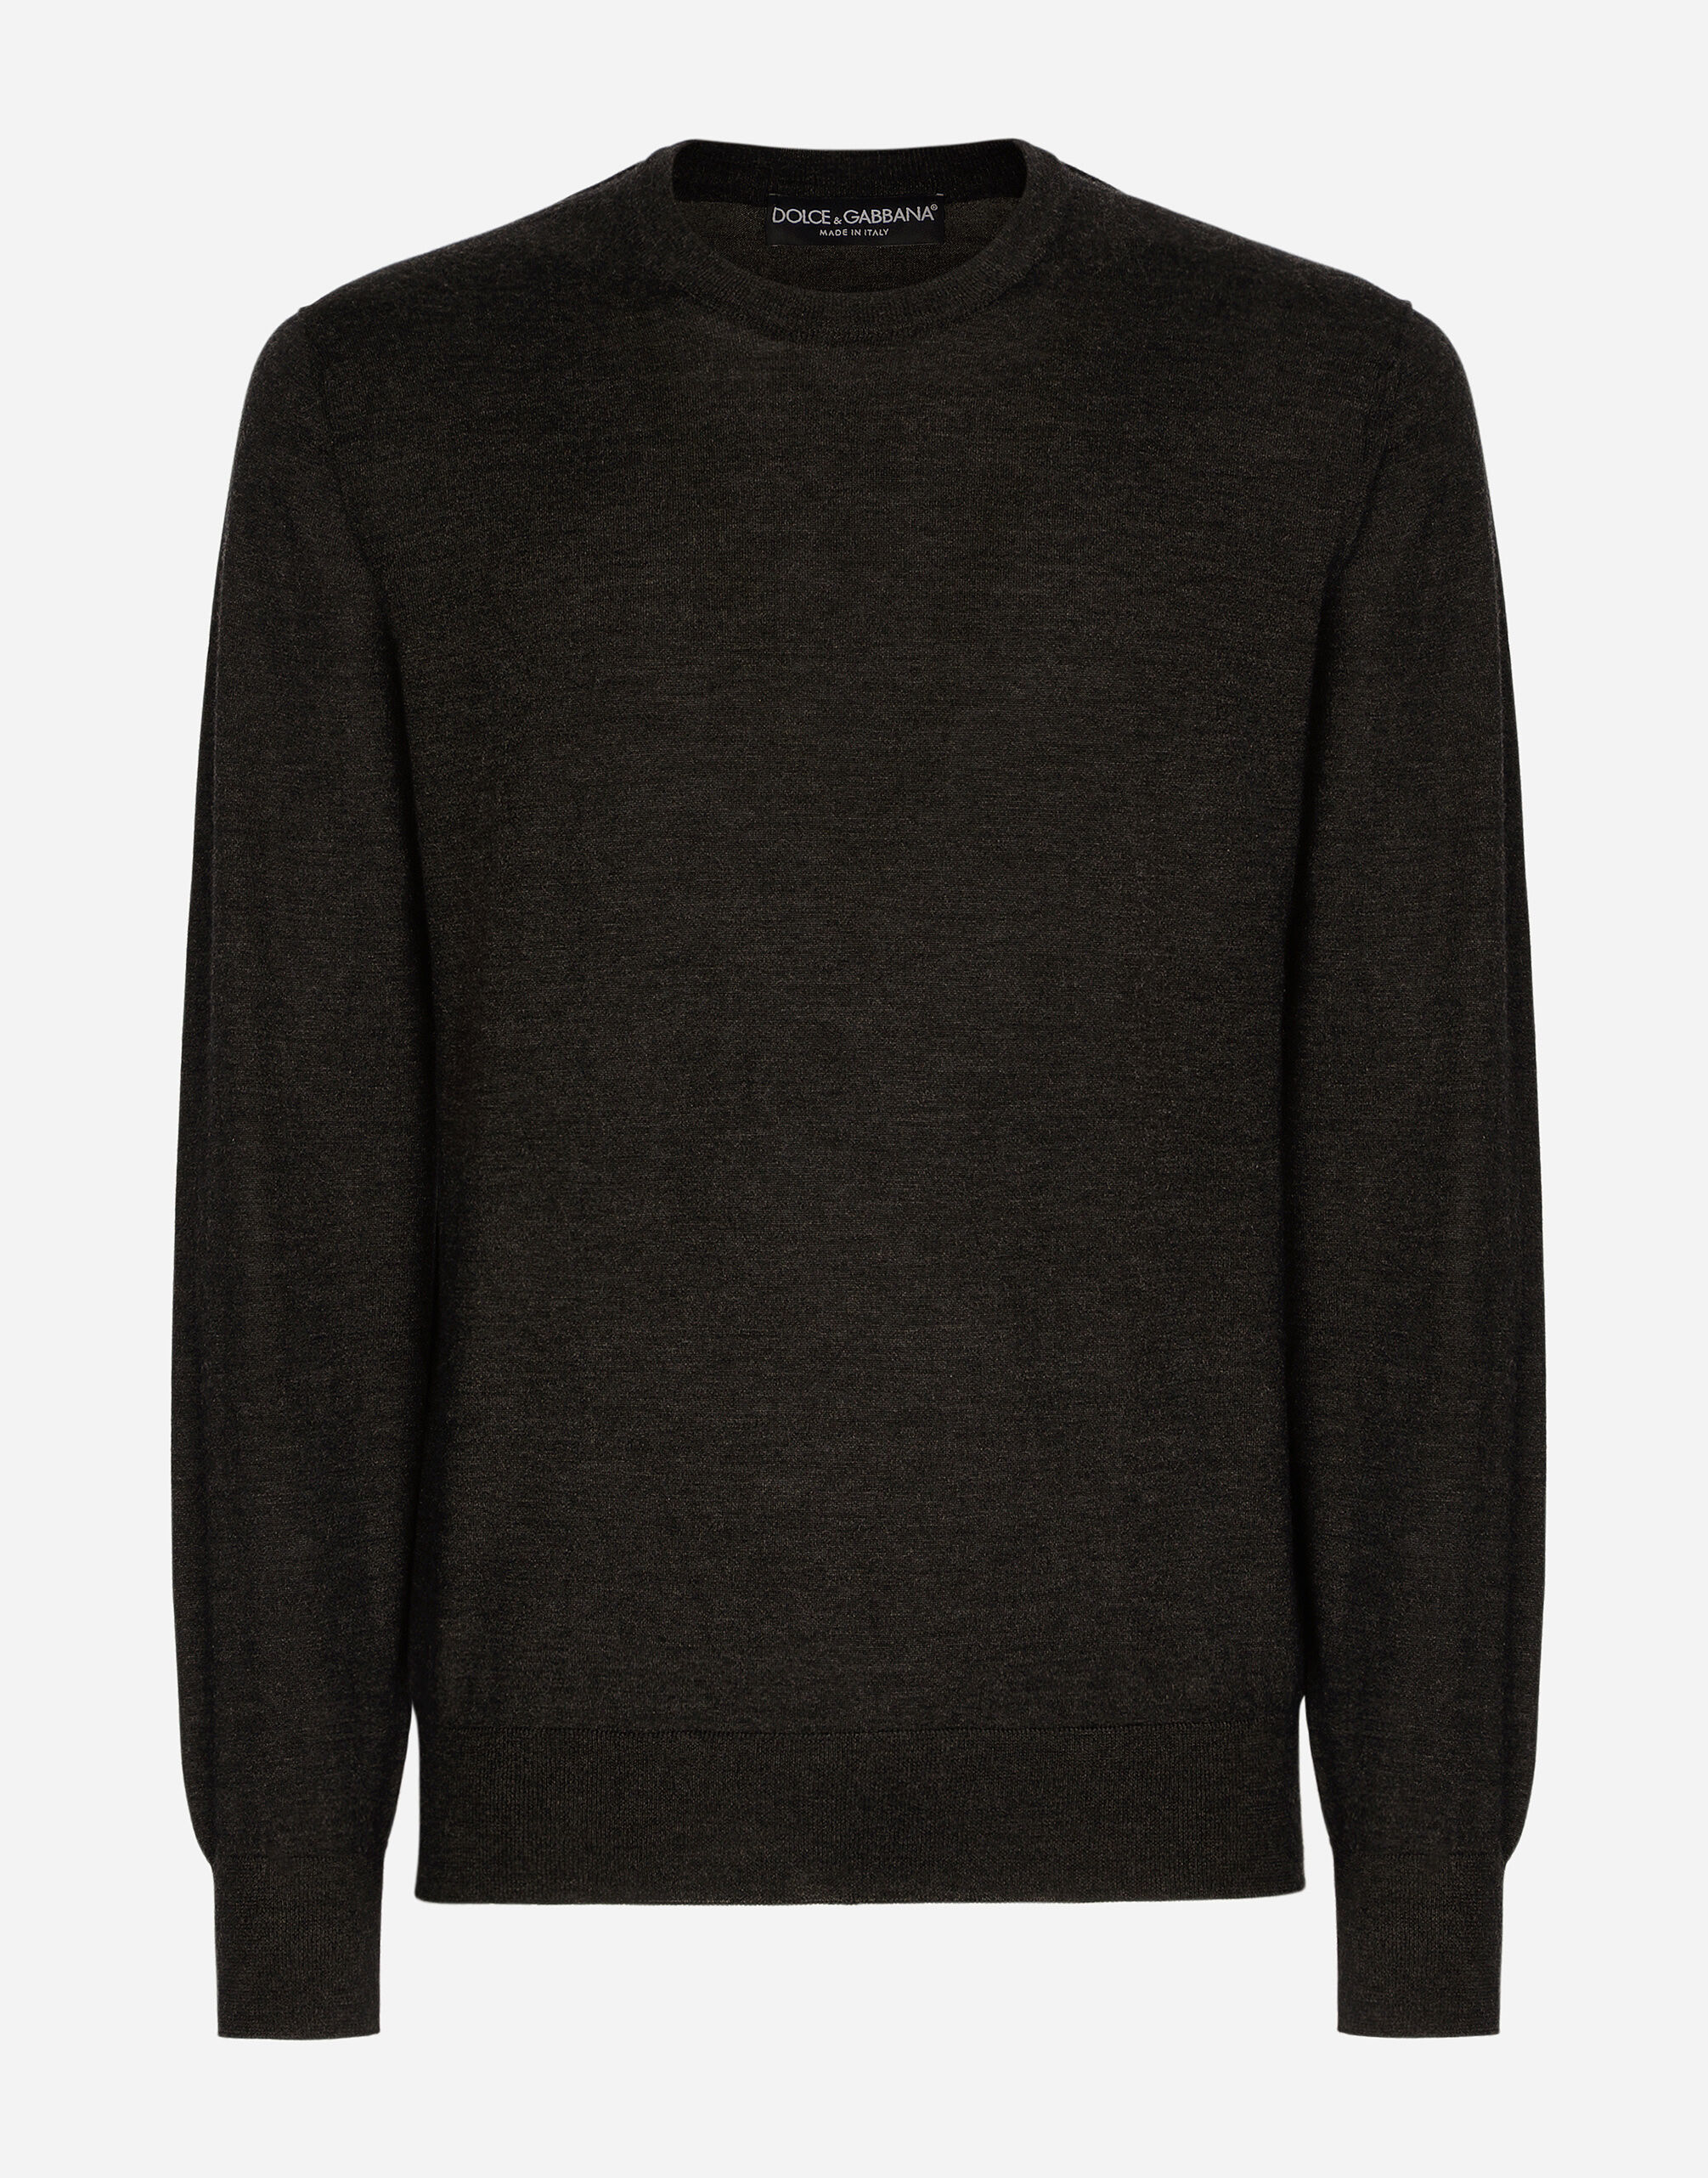 Dolce & Gabbana Extra-fine cashmere round-neck sweater Black GXL30TJAWM9